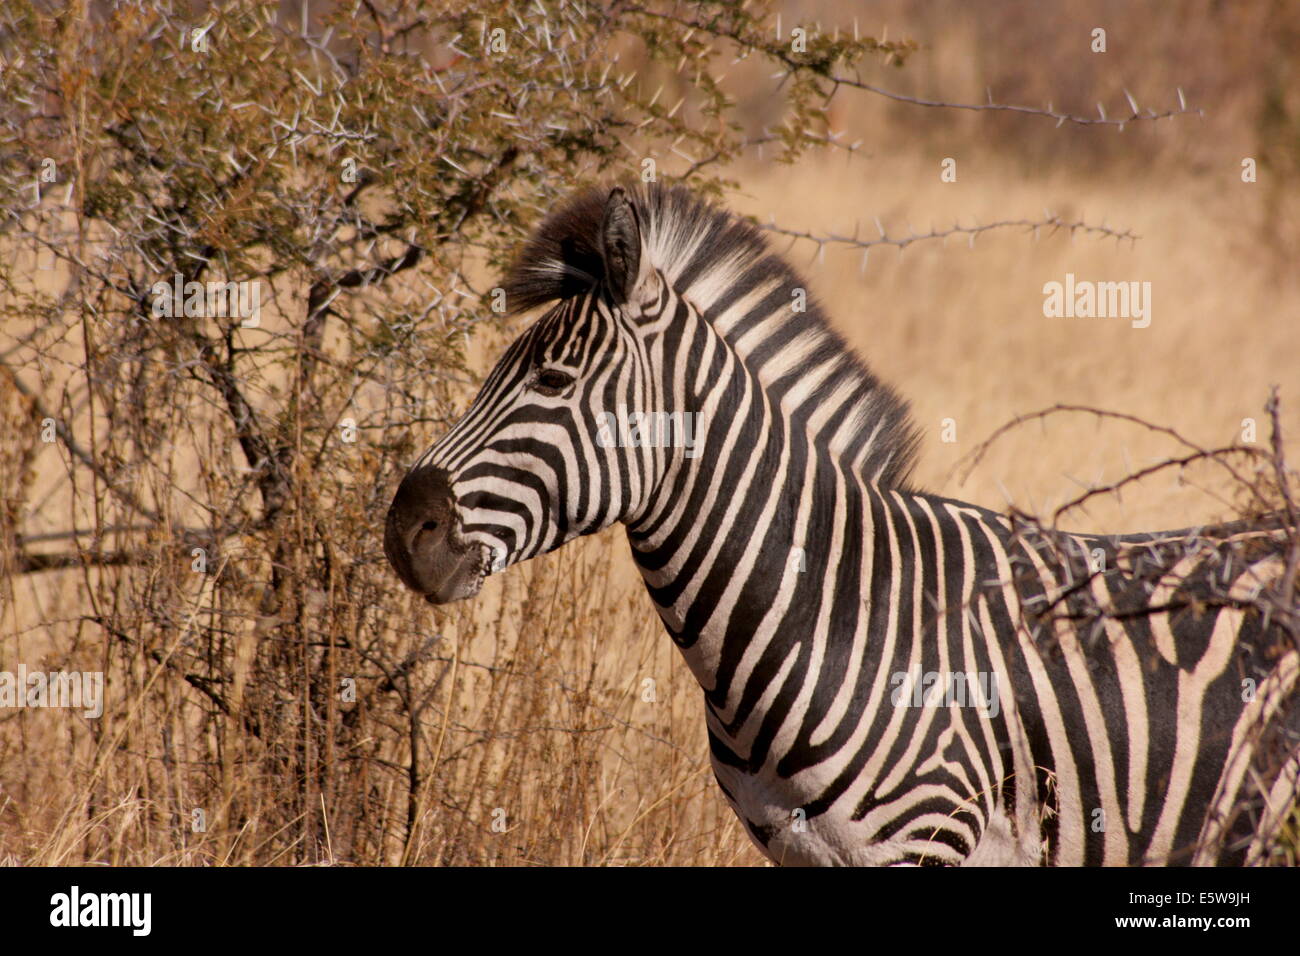 Adult wild Burchell's Zebra hiding amongst Acacia thorns in Pilanesberg National Park, South Africa. Stock Photo